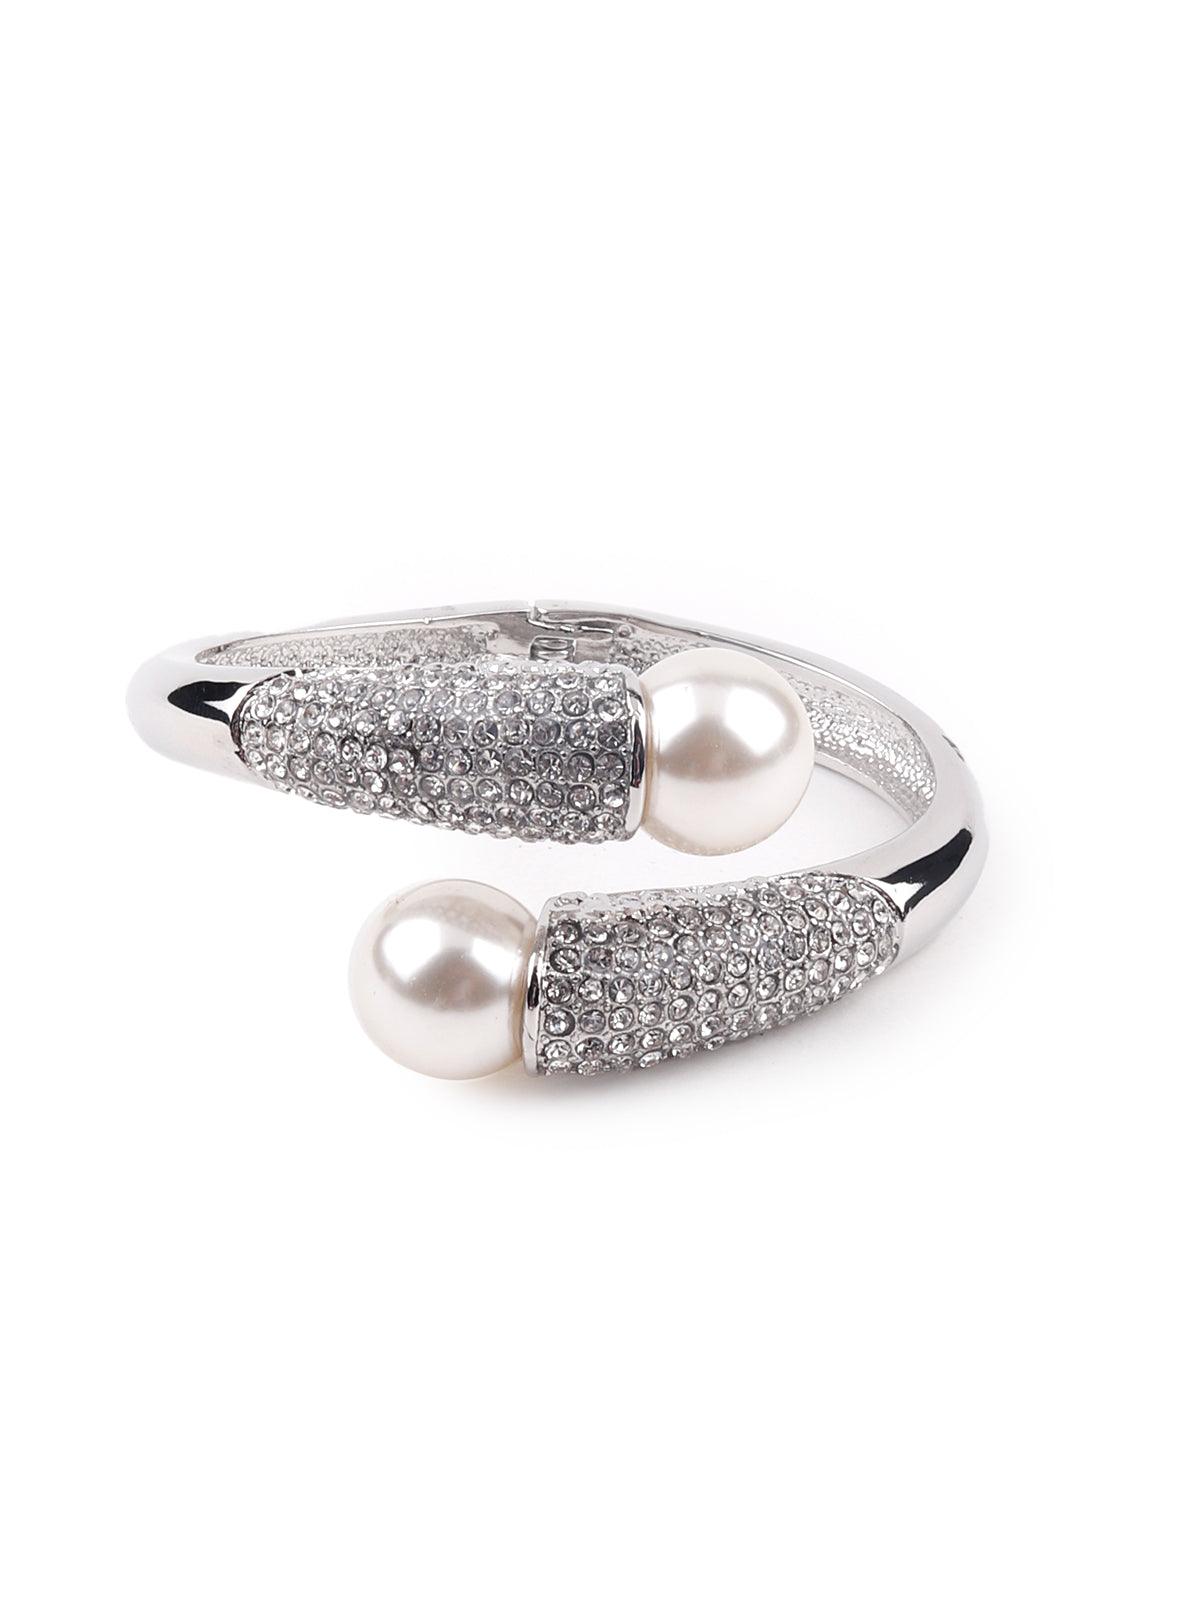 Silver-studded Kada bracelet for women - Odette